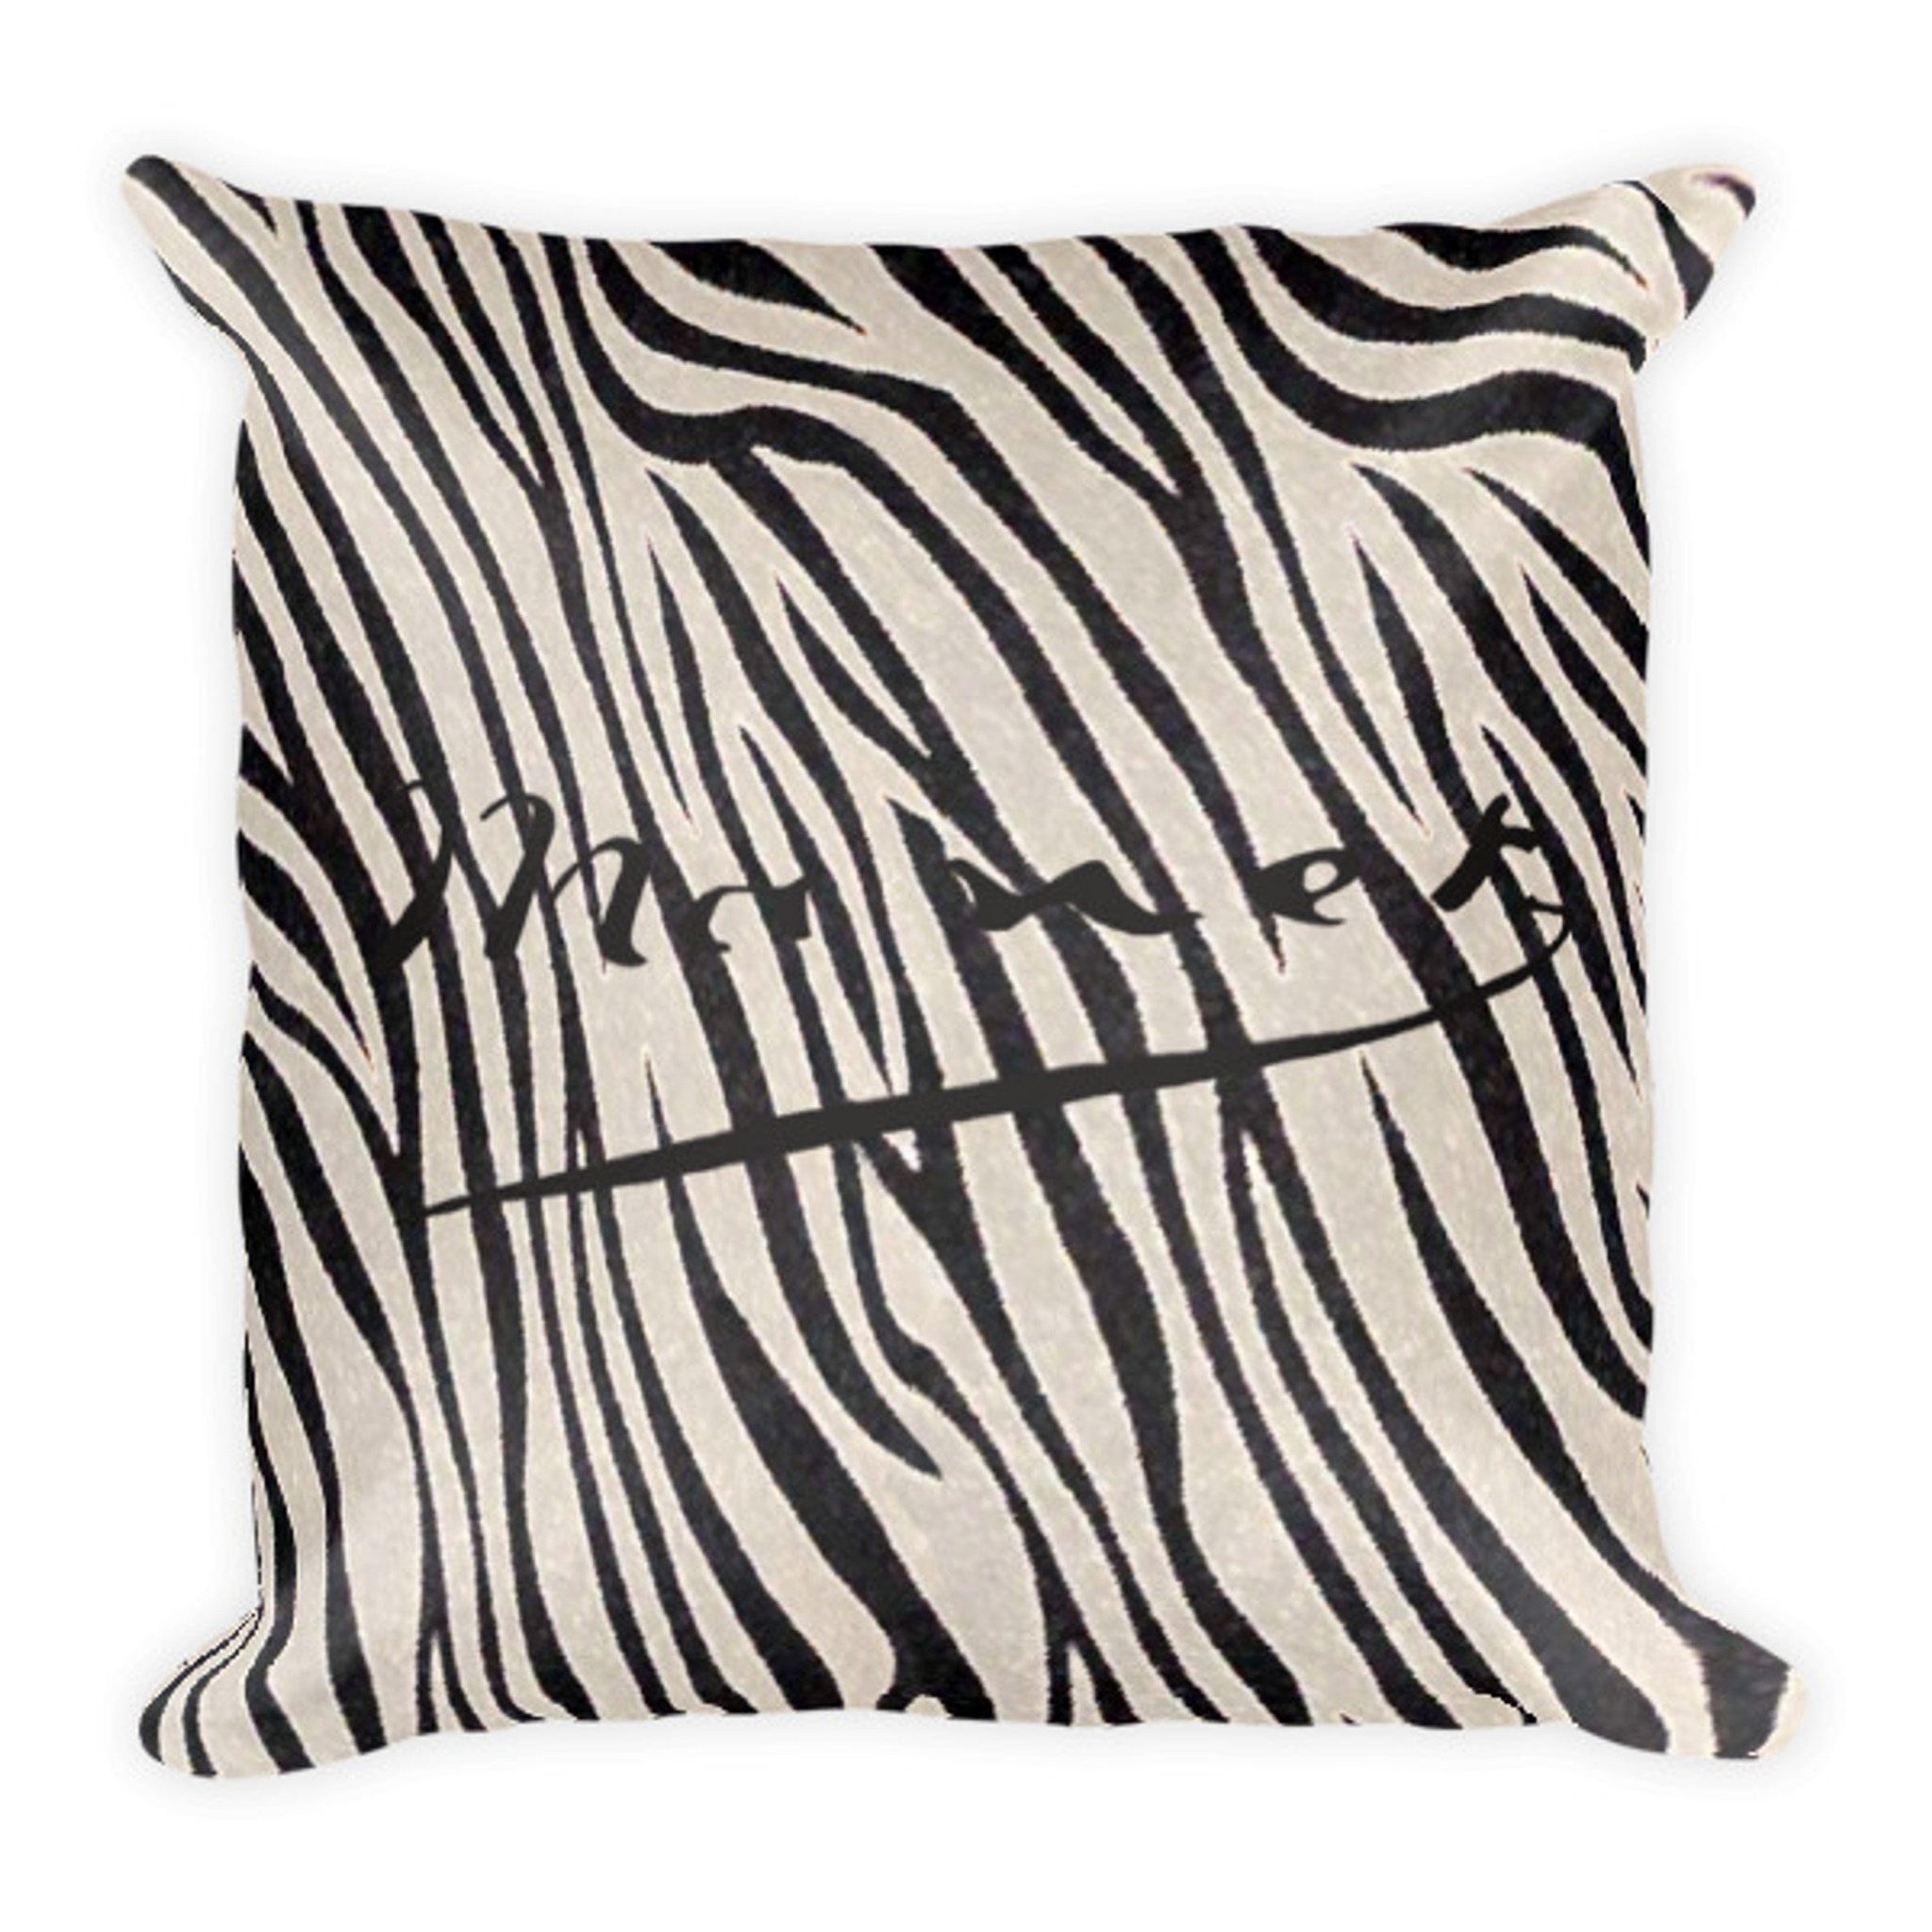 Manet Black White Decorative Zebra Throw Pillow Neoclassical